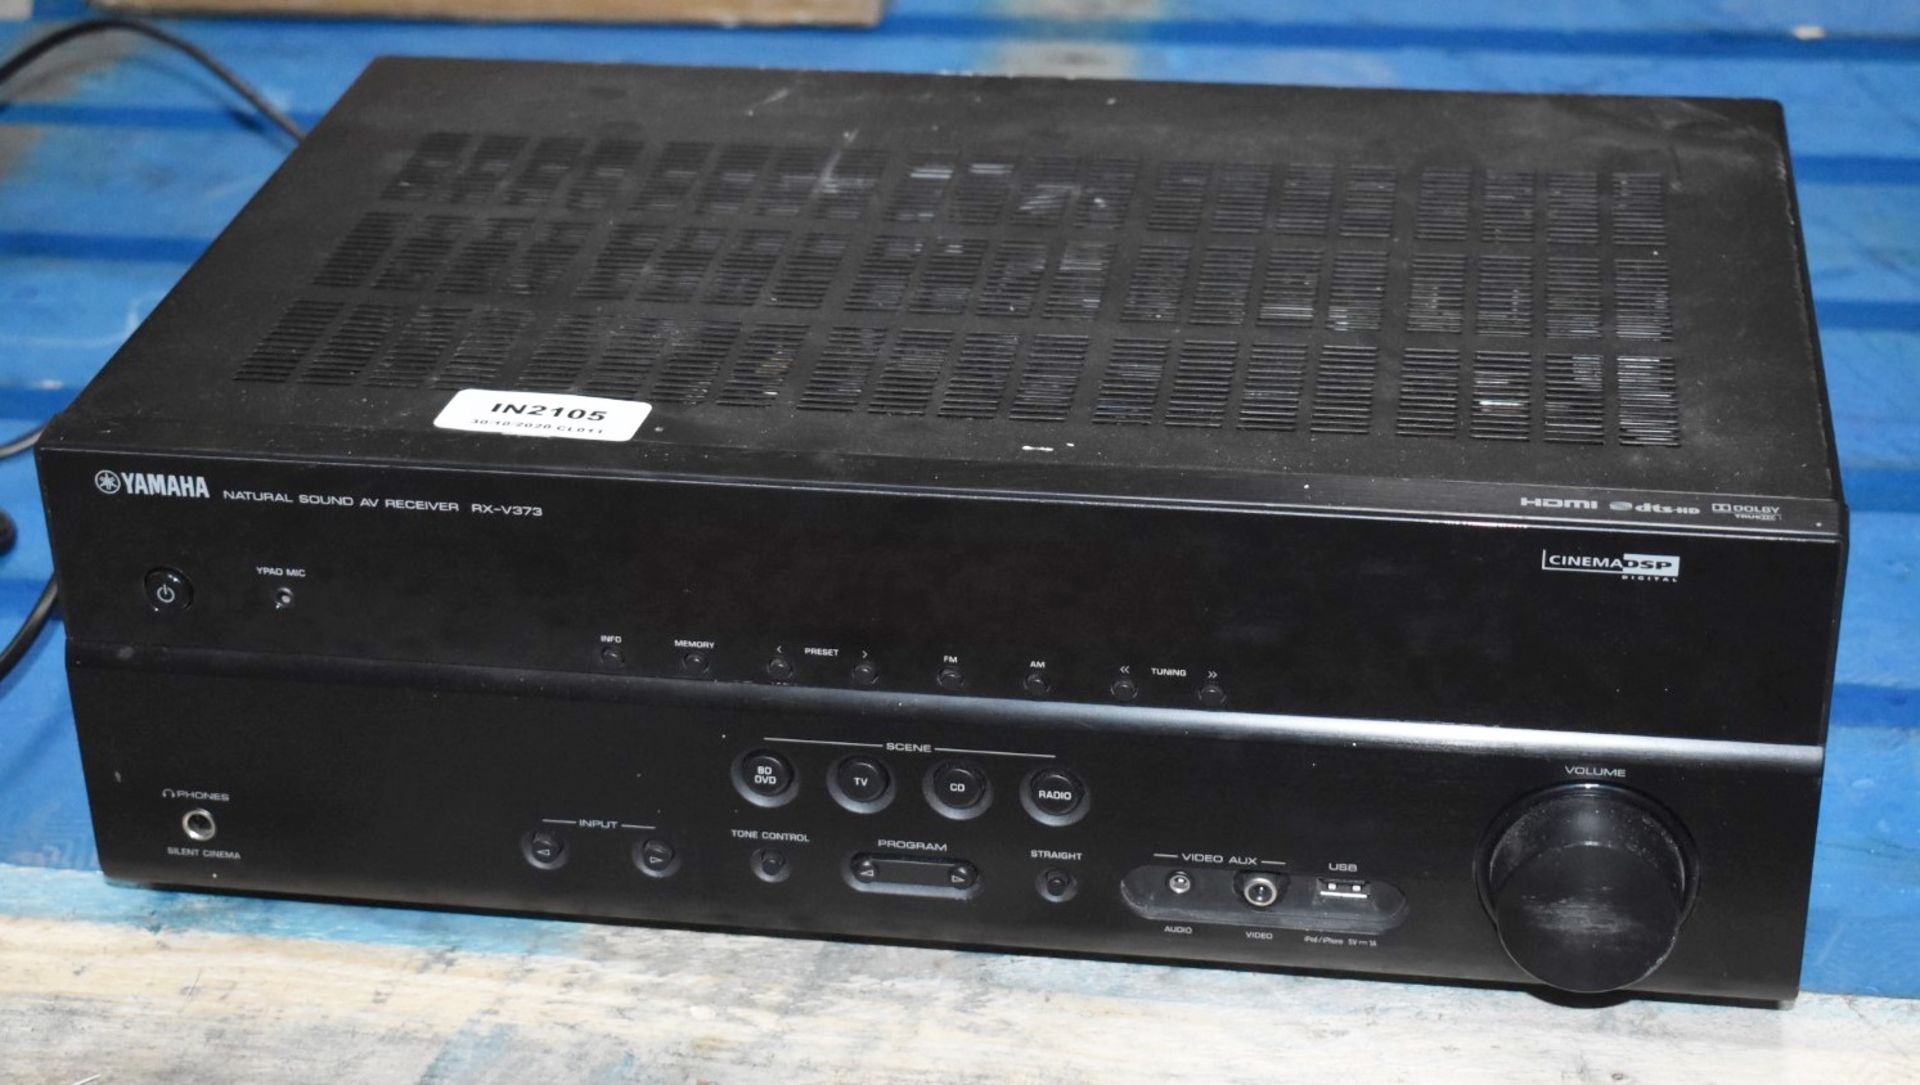 1 x Yamaha RX-V373 Natural Sound AV Receiver - DSP Cinema Amp - Ref: In2105 Pal1 WH1 - CL546 -